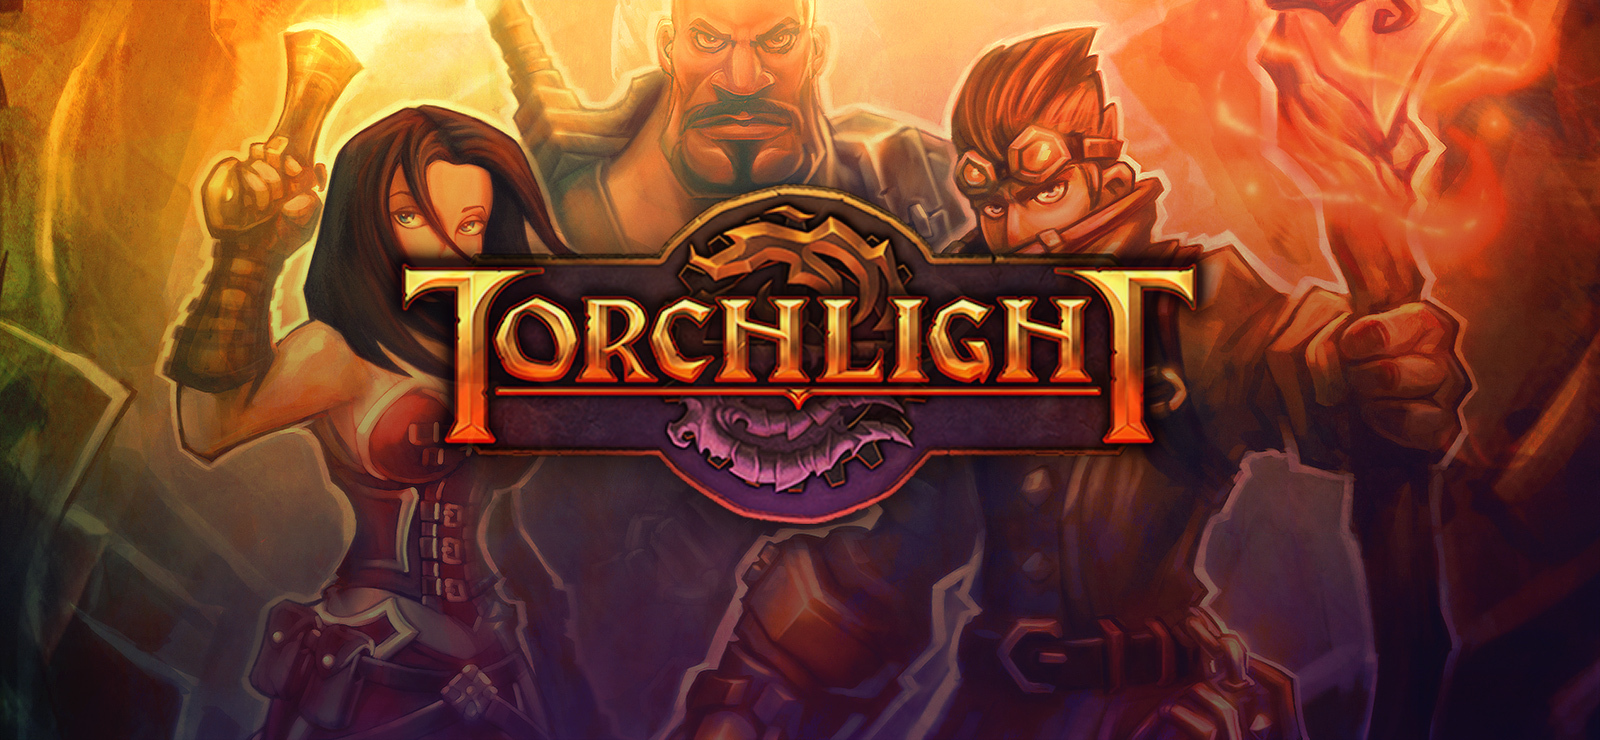 Bargain-Priced Torchlight Is One Addictive Diablo Clone